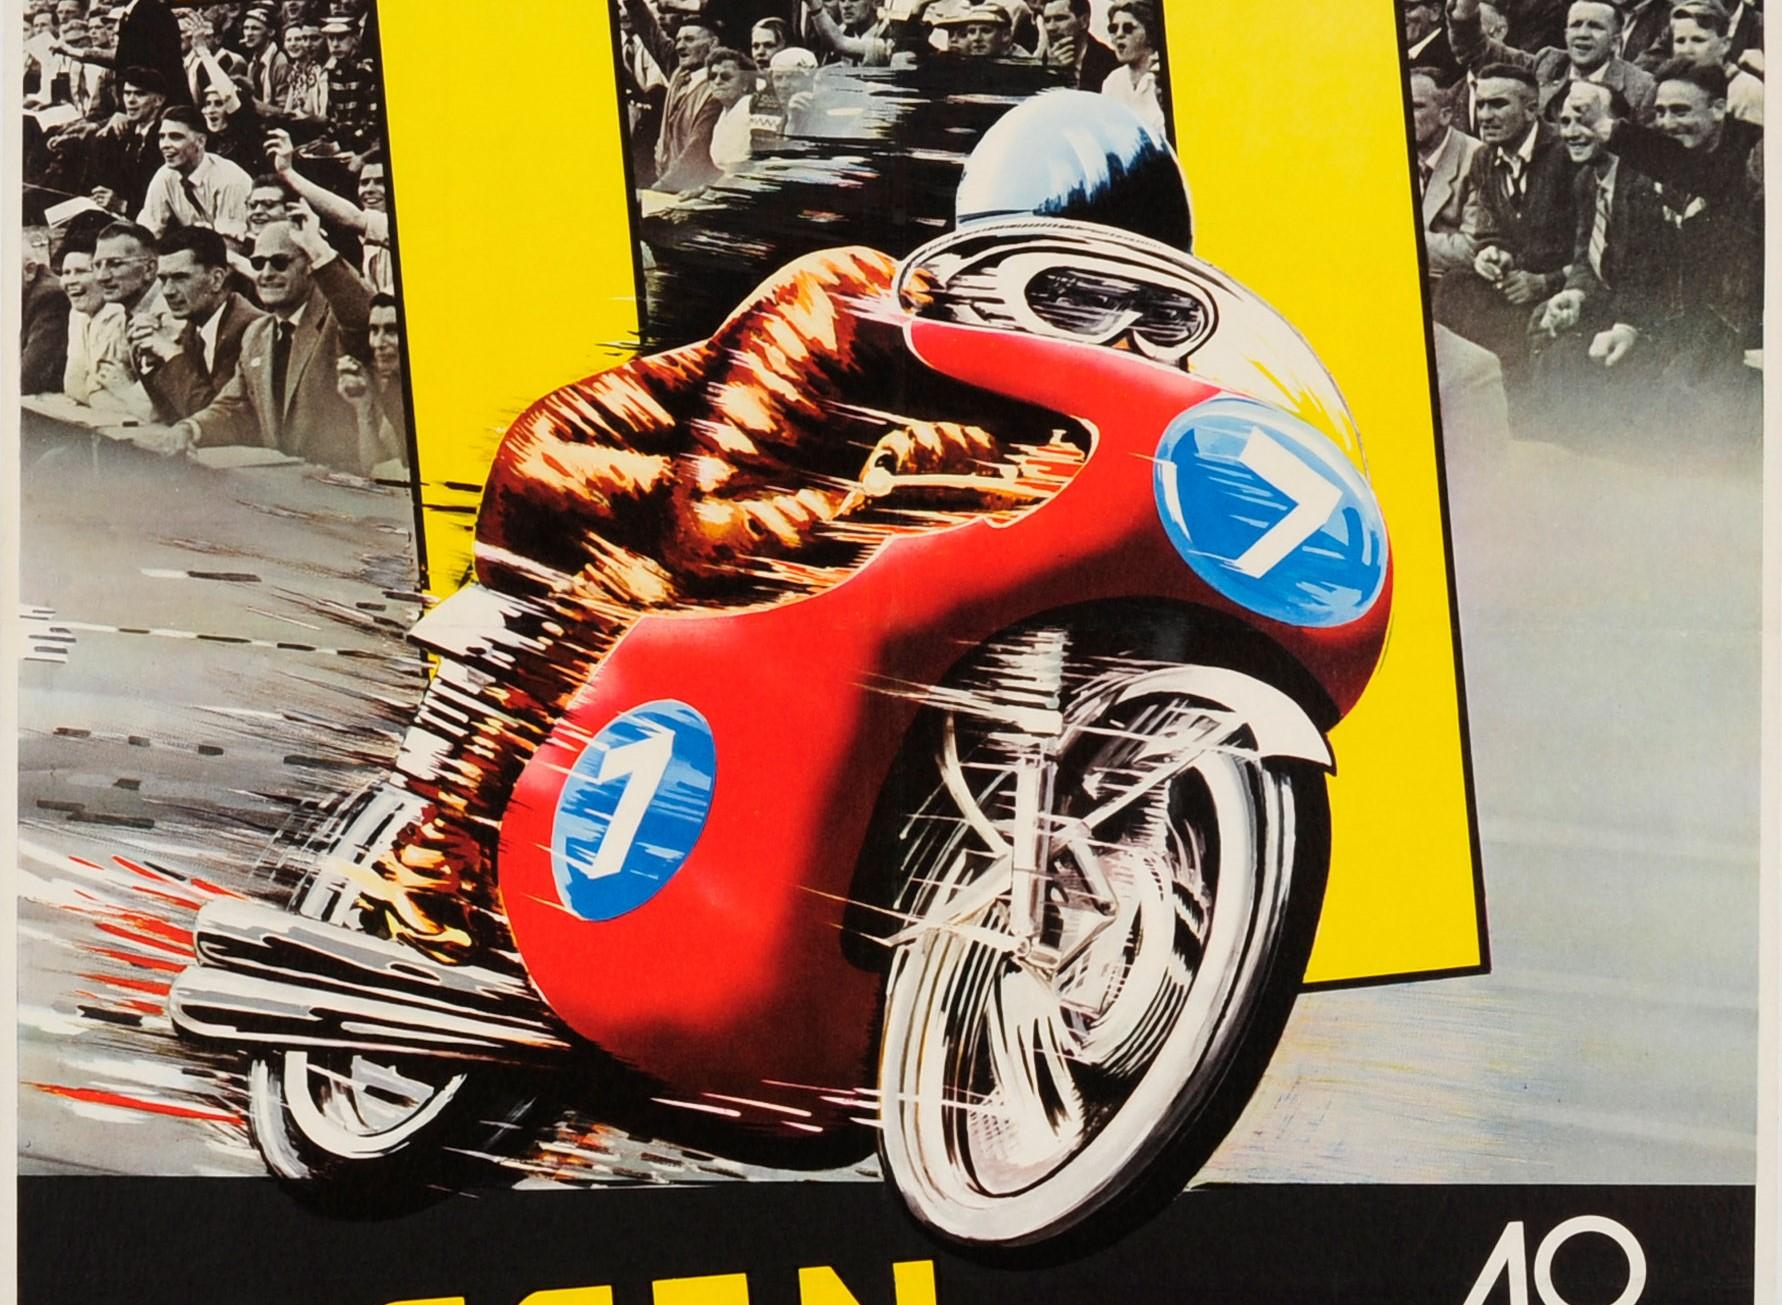 Original Vintage Assen Motorcycle Race Sport Poster 40 Years TT Races 1925-1965 - Gray Print by Otter